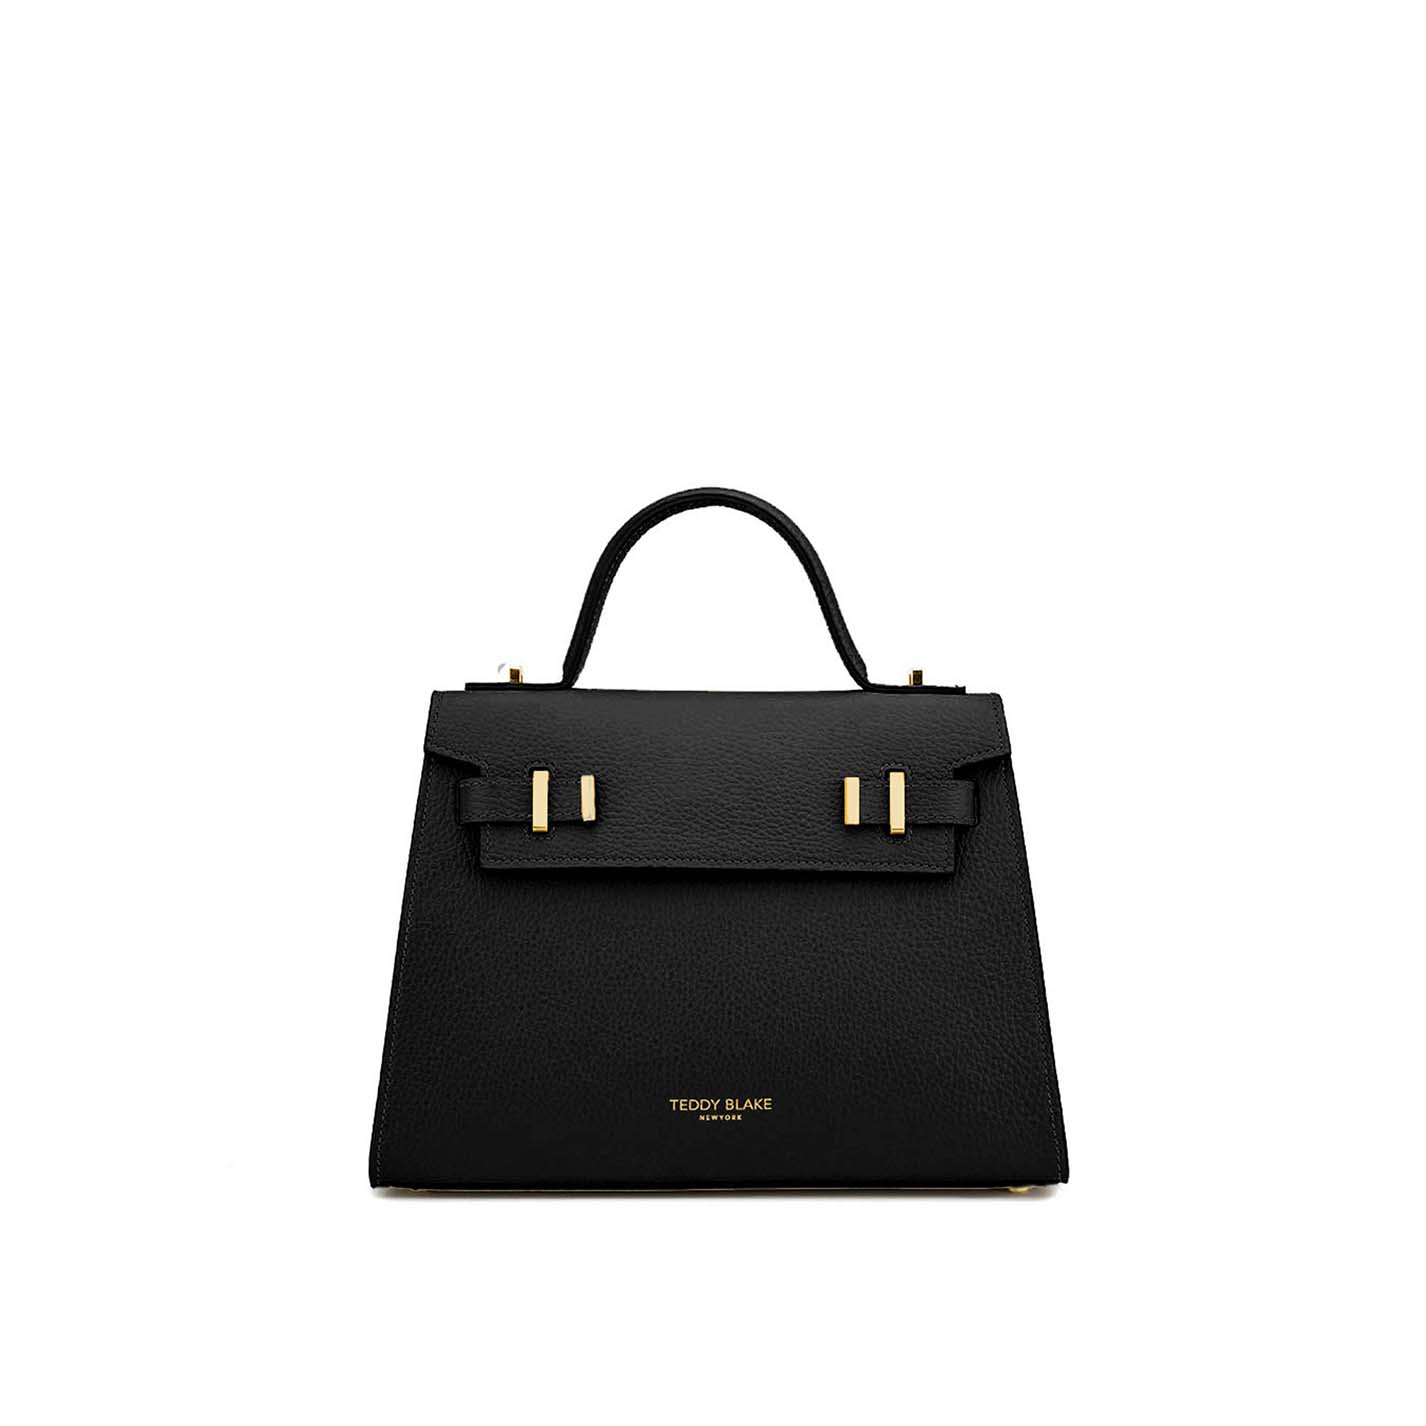 ava-gold-11-black-leather-bag-front